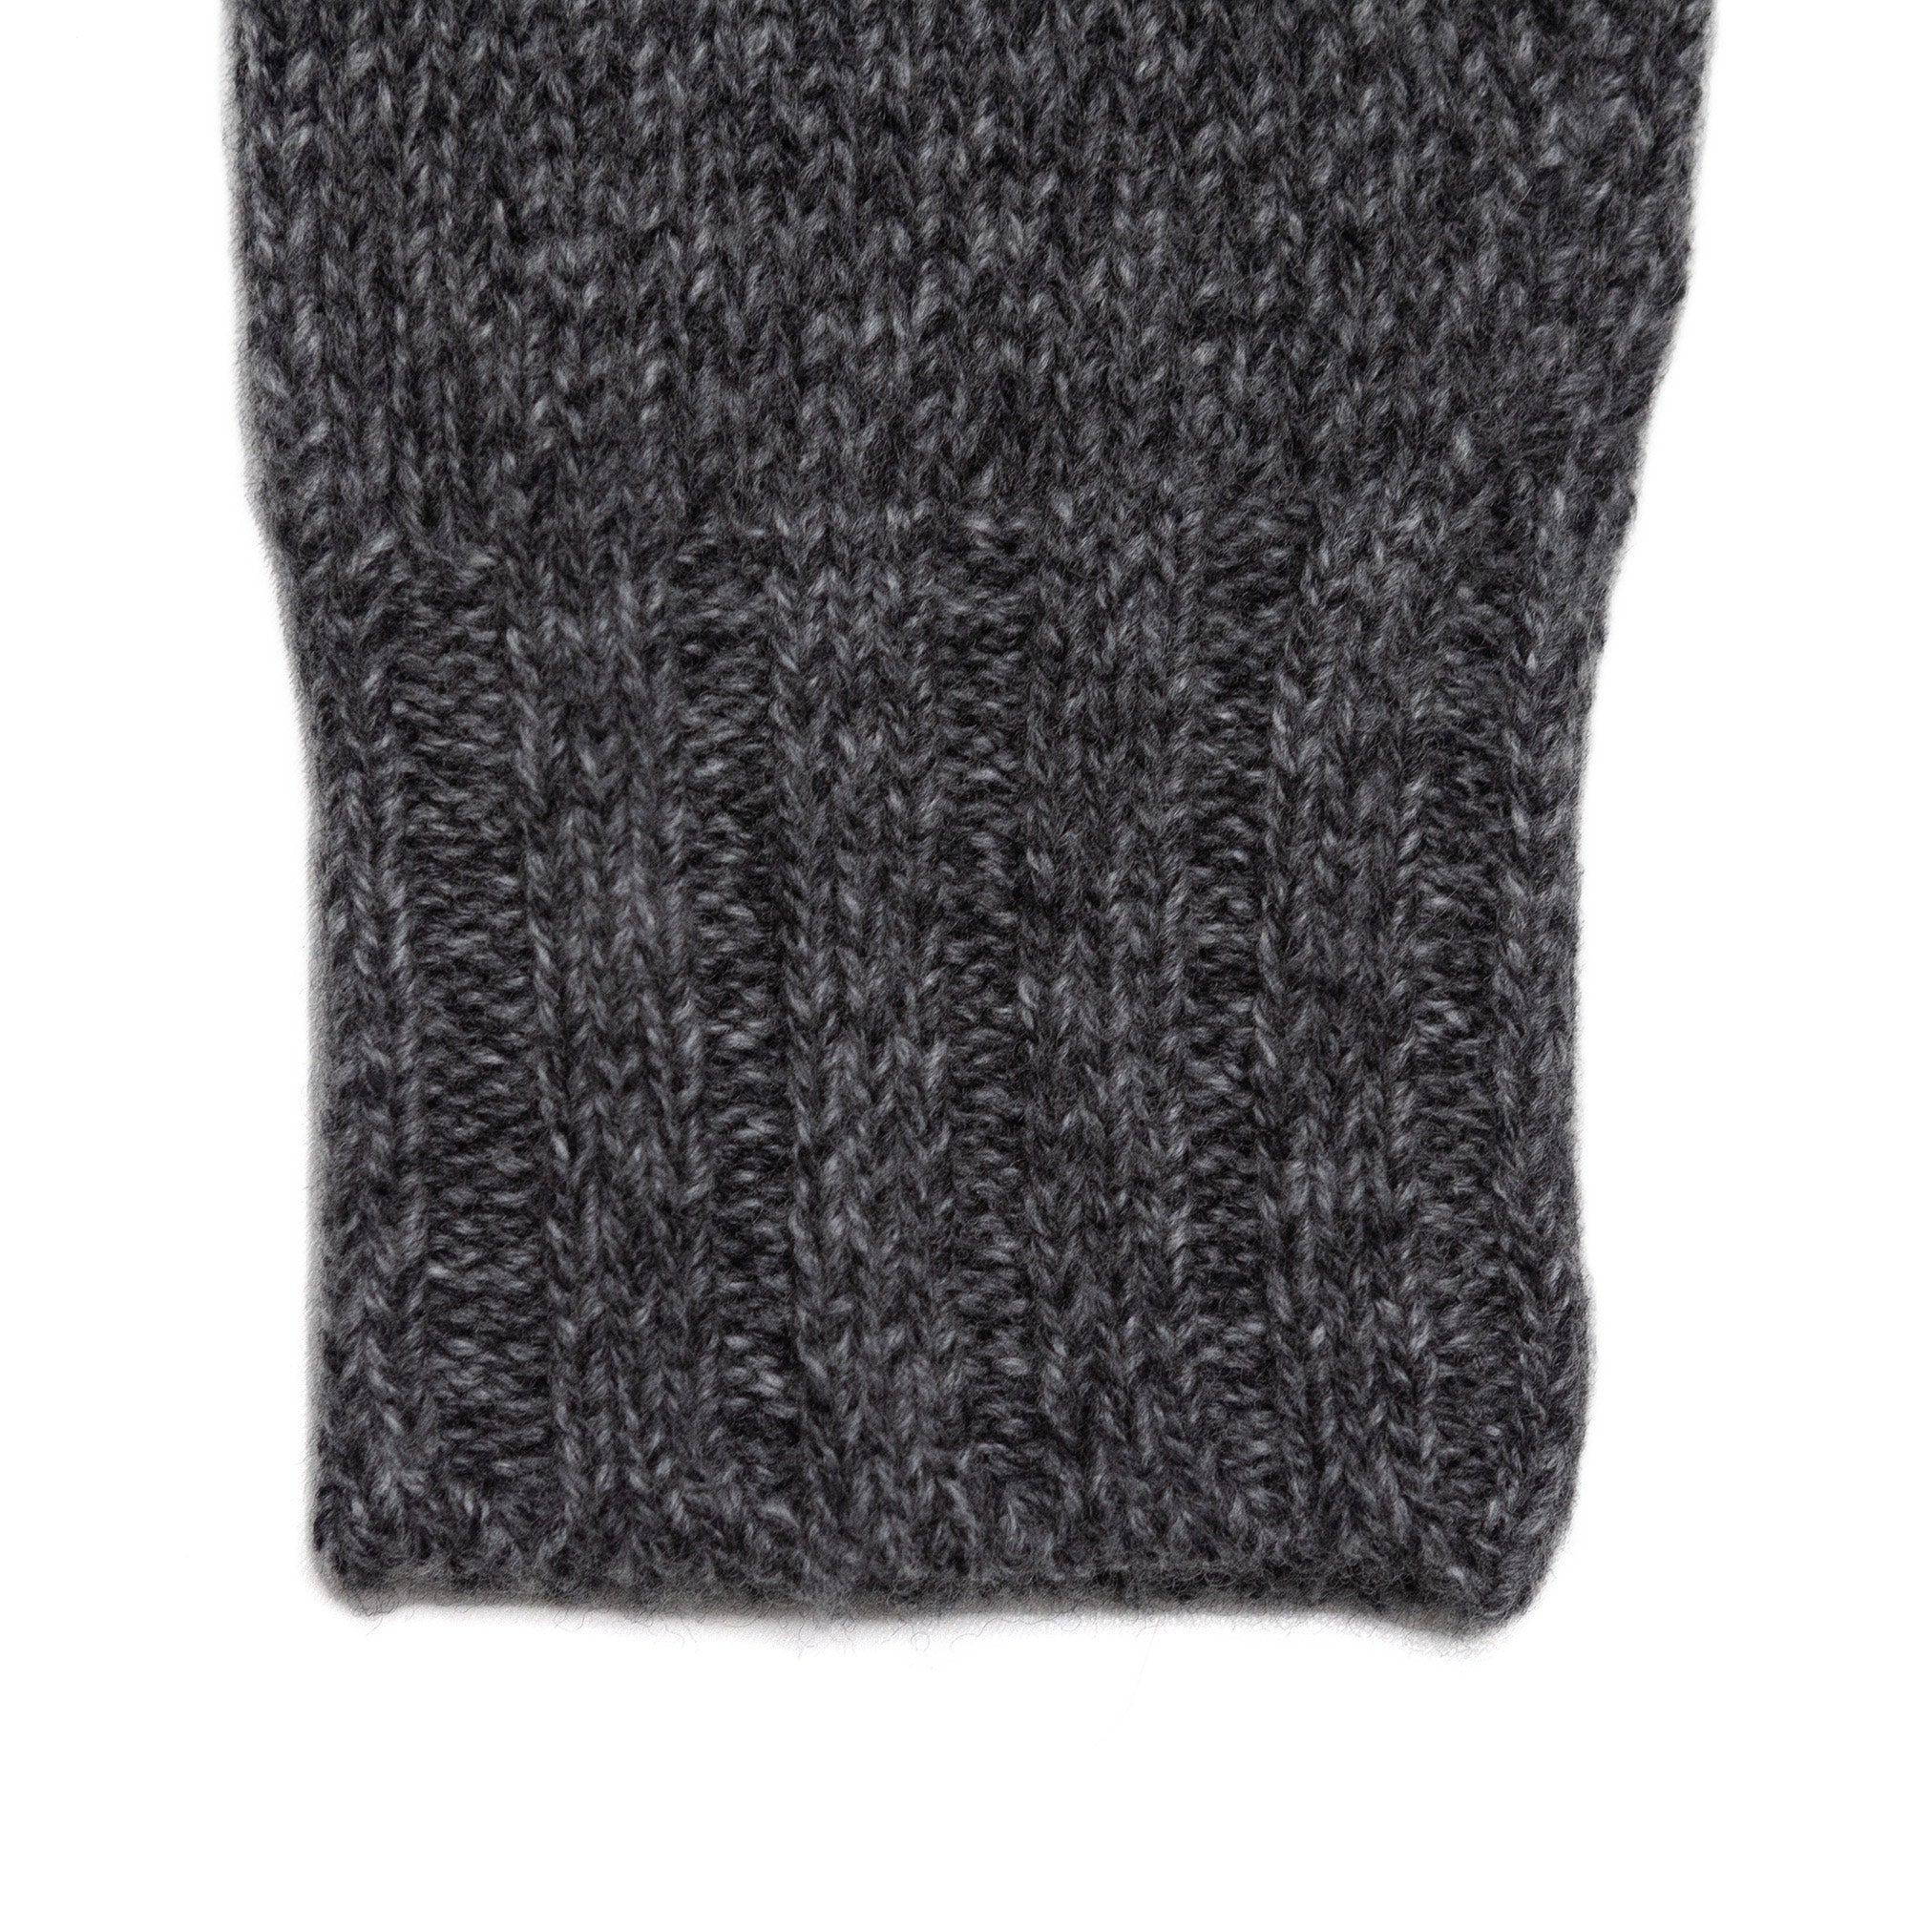 Rollneck Sweater in Charcoal Melange